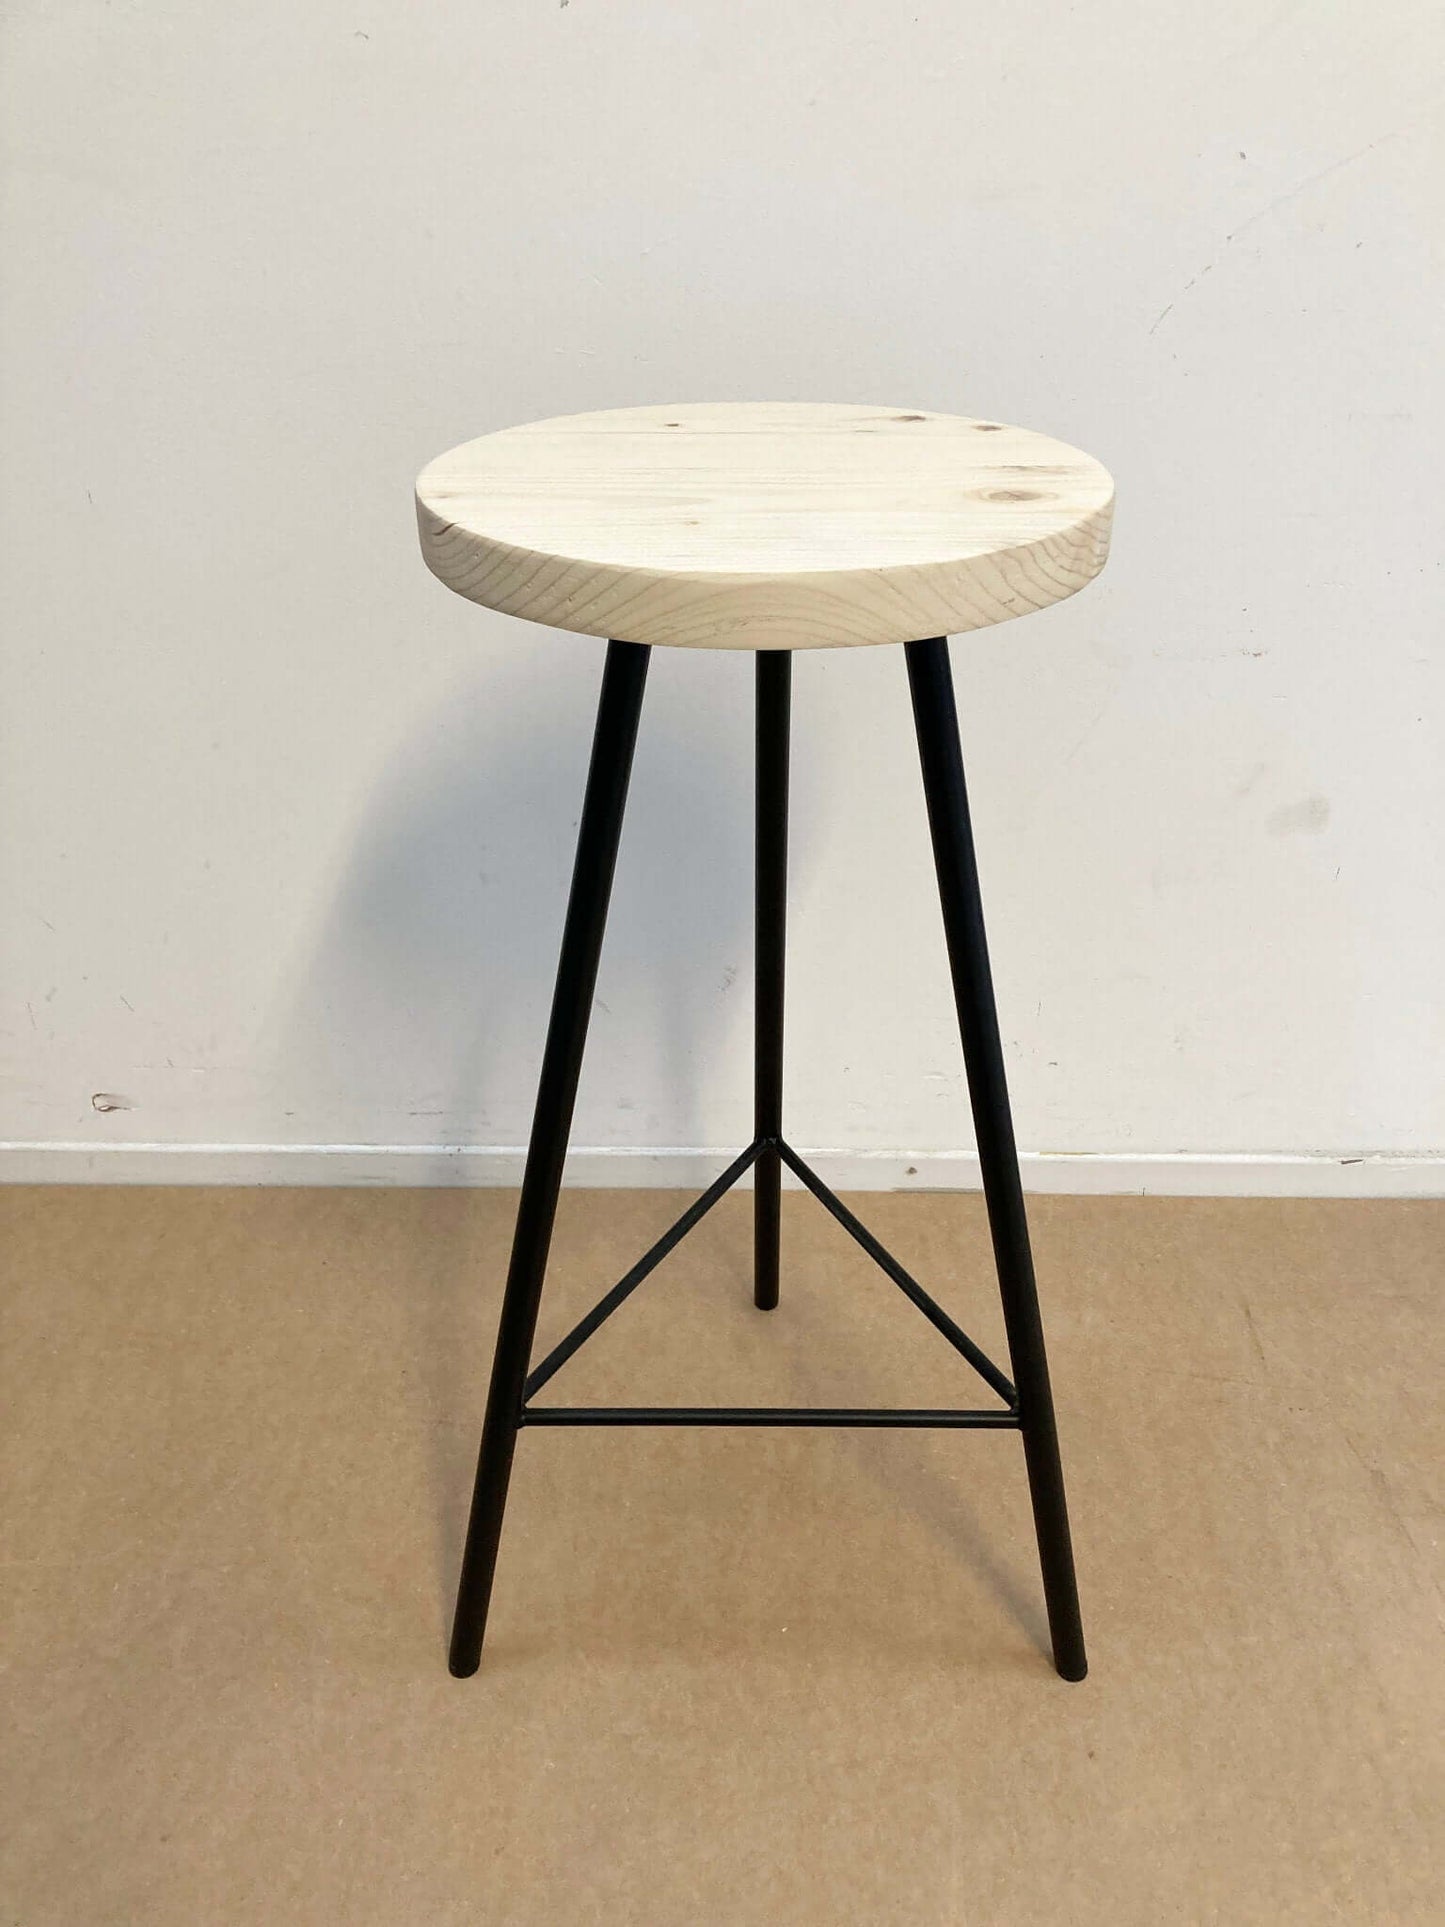 Reclaimed wood stool with optional base.